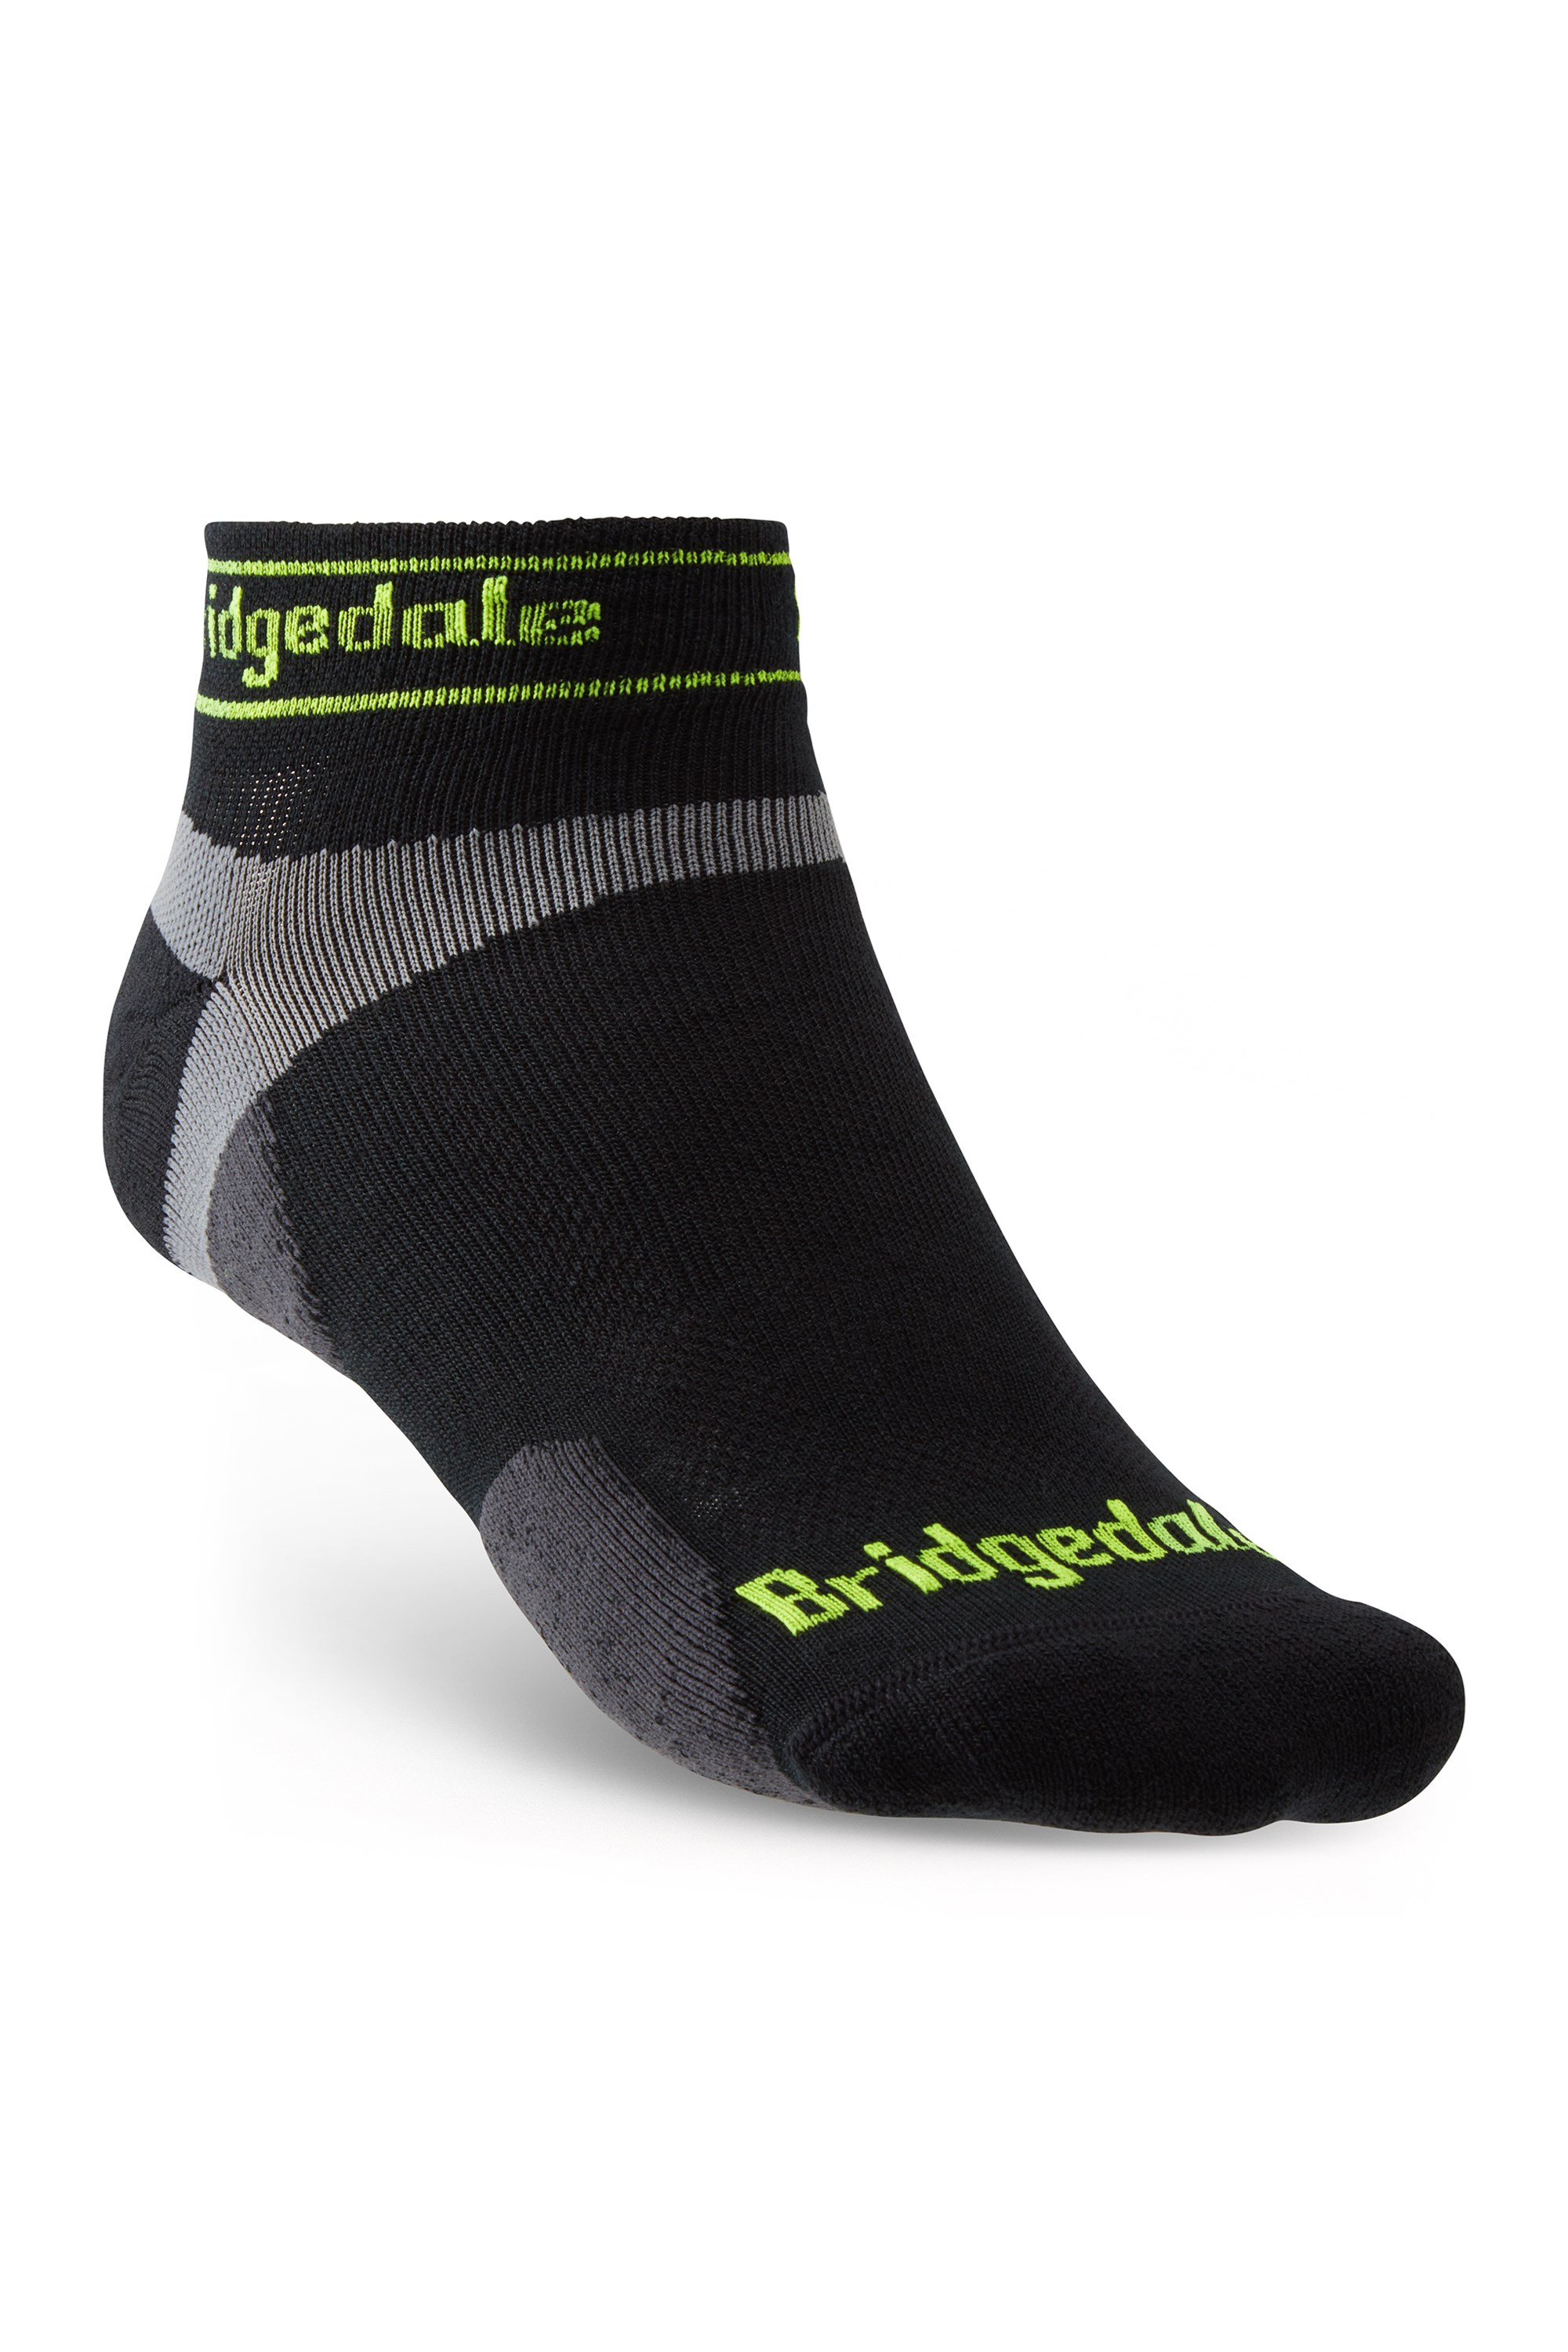 Bridgedale Mens Lightweight Low Merino Sock Black